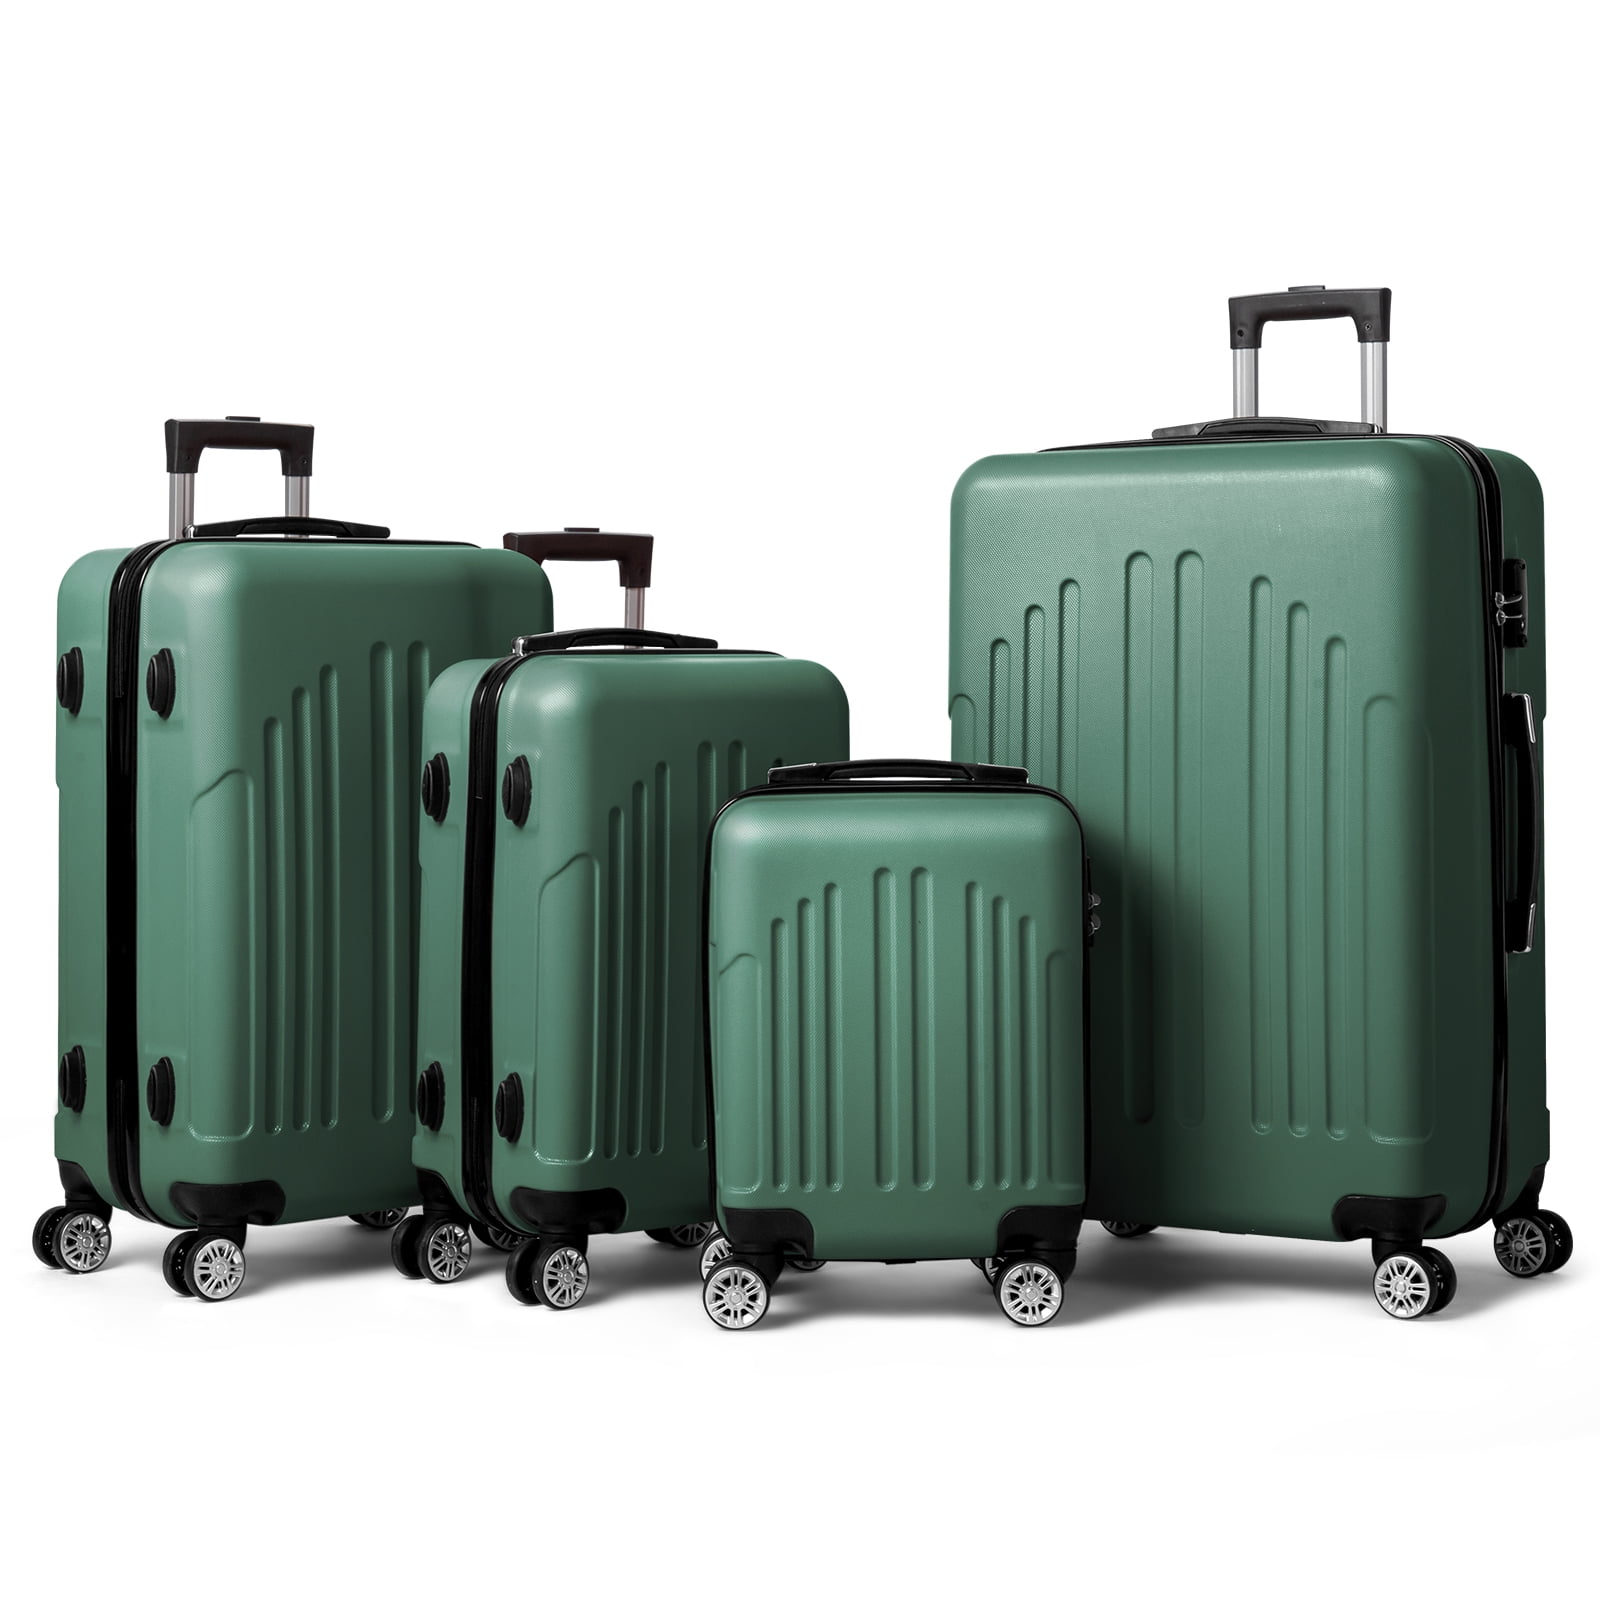 Zimtown 4 Piece Luggage Set, ABS Hard Shell Suitcase Luggage Sets ...